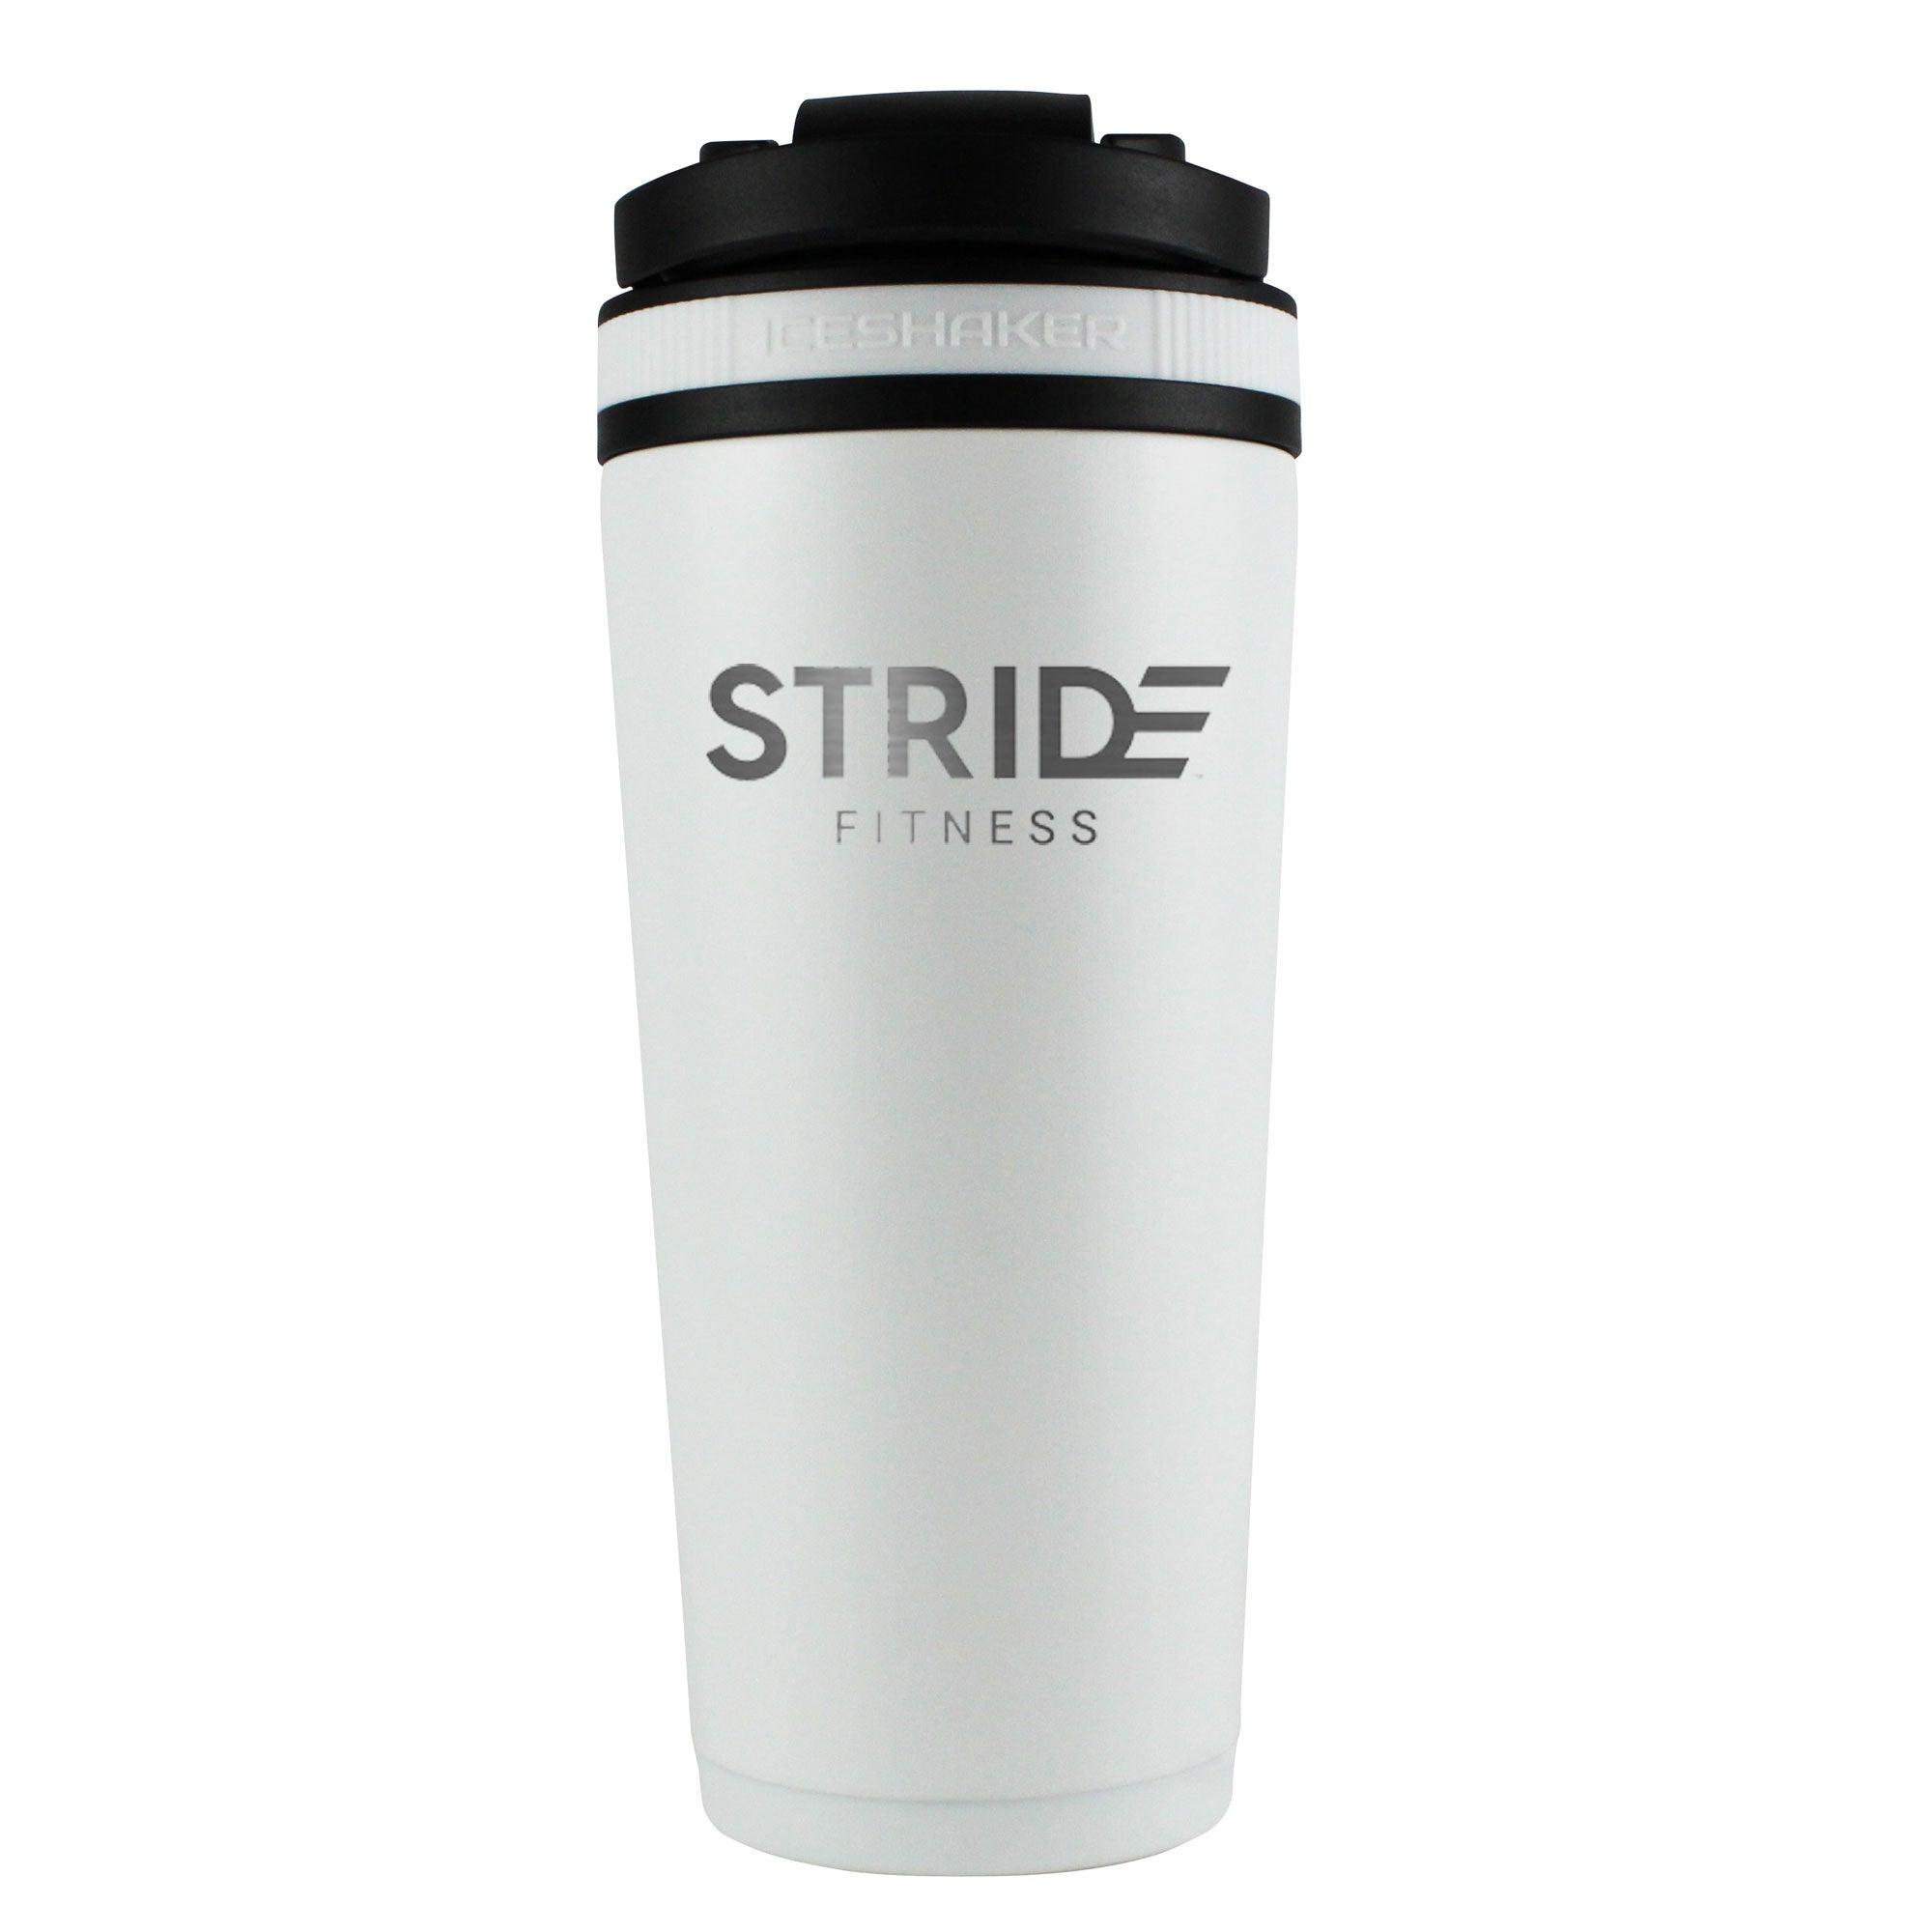 Stride Fitness 26oz Ice Shaker - White